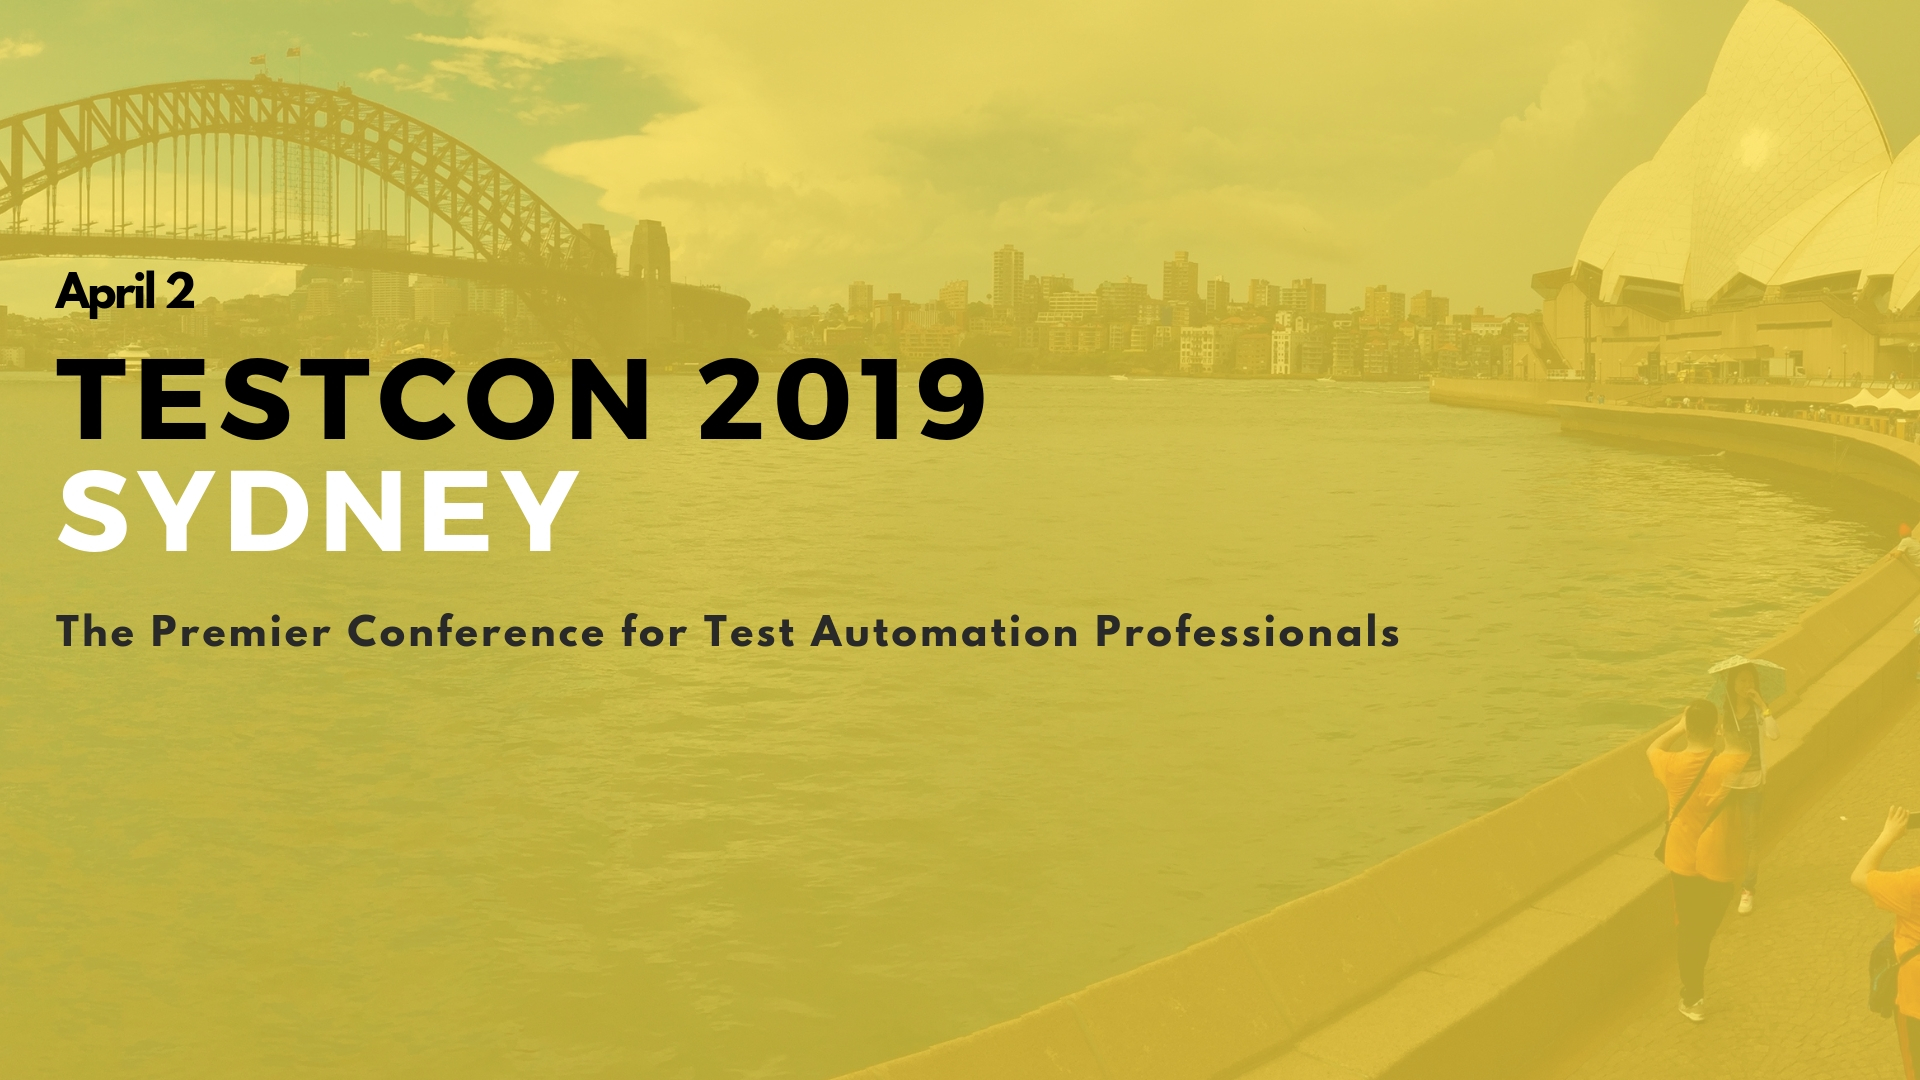 TESTCON 2019 Sydney, Central, New South Wales, Australia